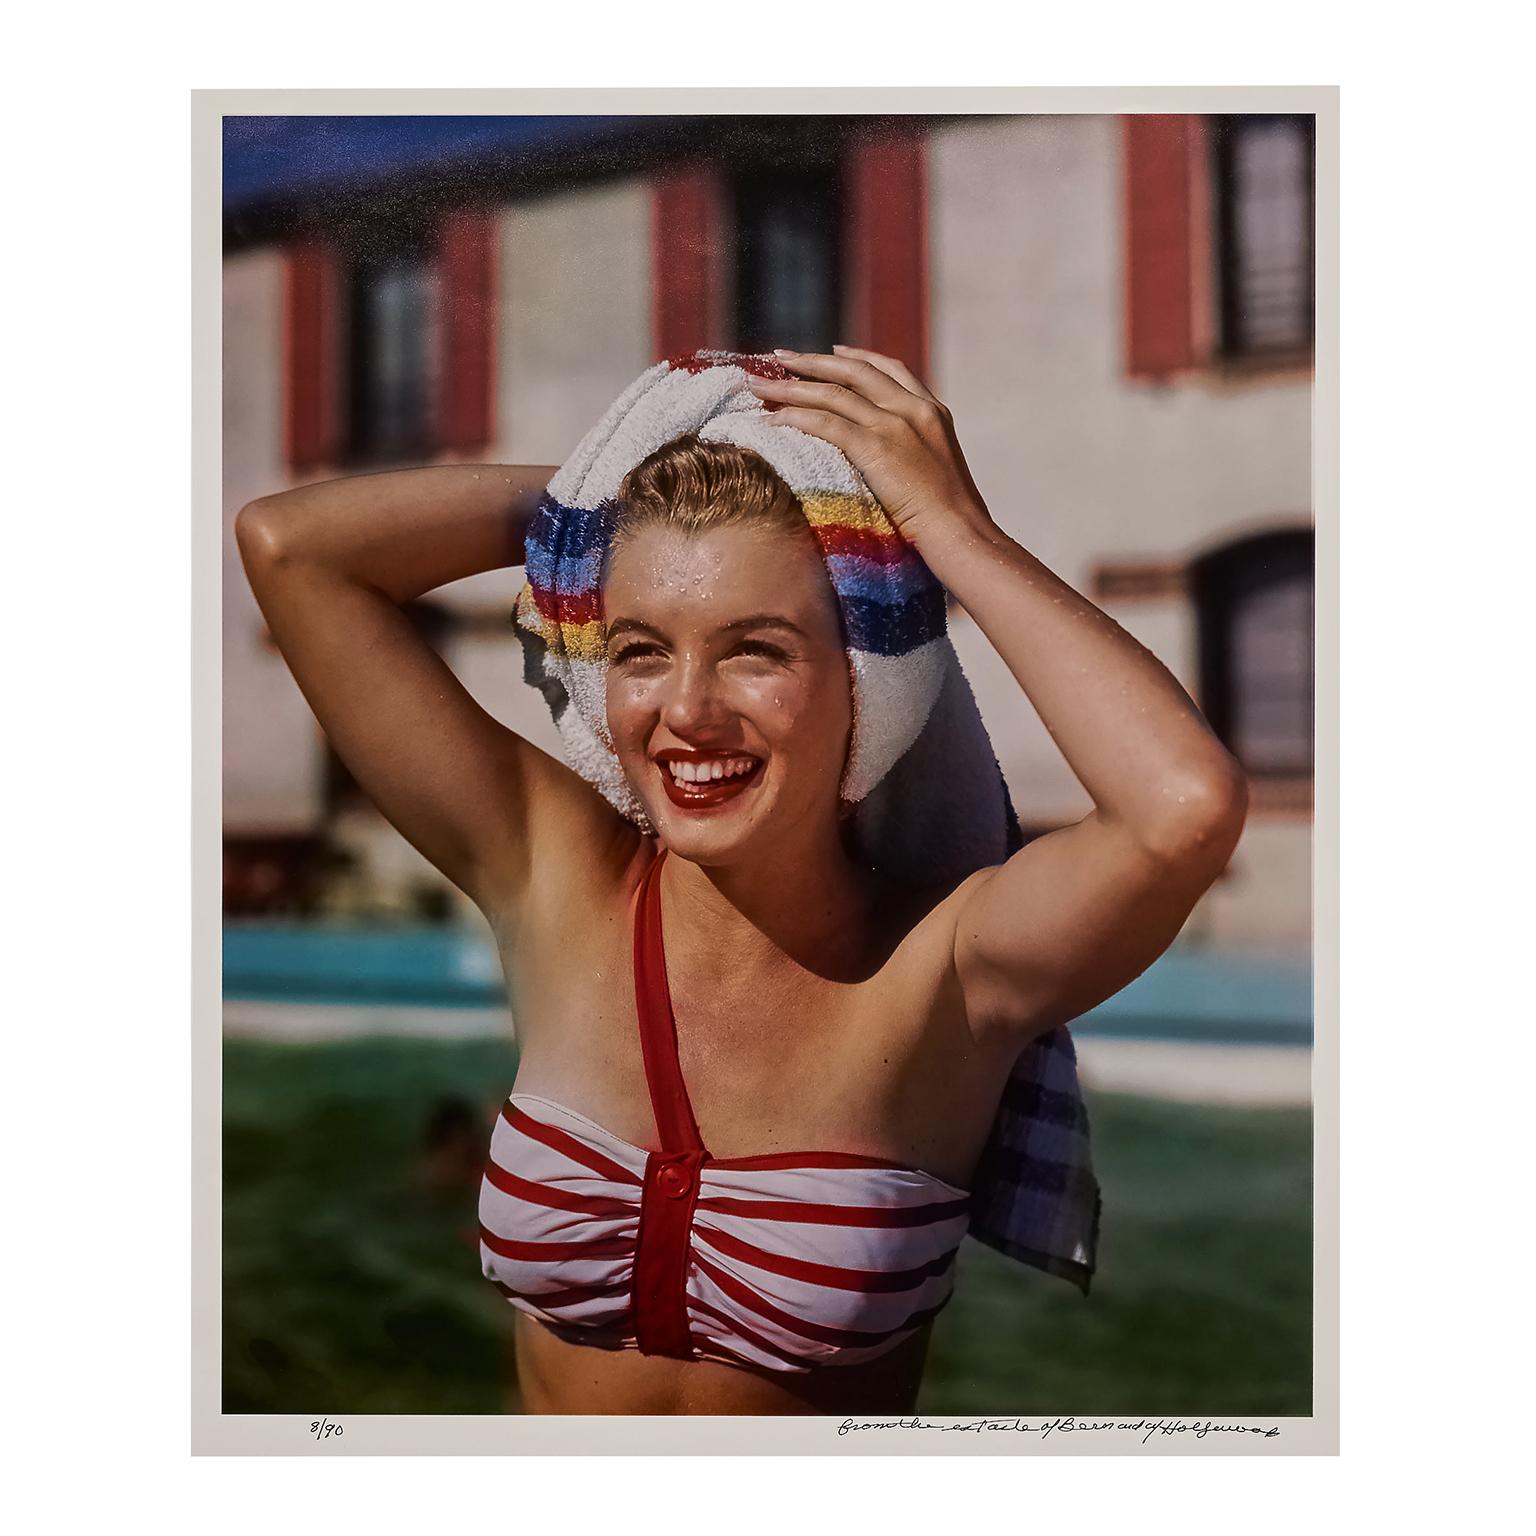 Bruno Bernard (Bernard of Hollywood) Portrait Photograph - Marilyn Monroe By Bernard Of Hollywood - Poolside With Rainbow Towel, Portrait